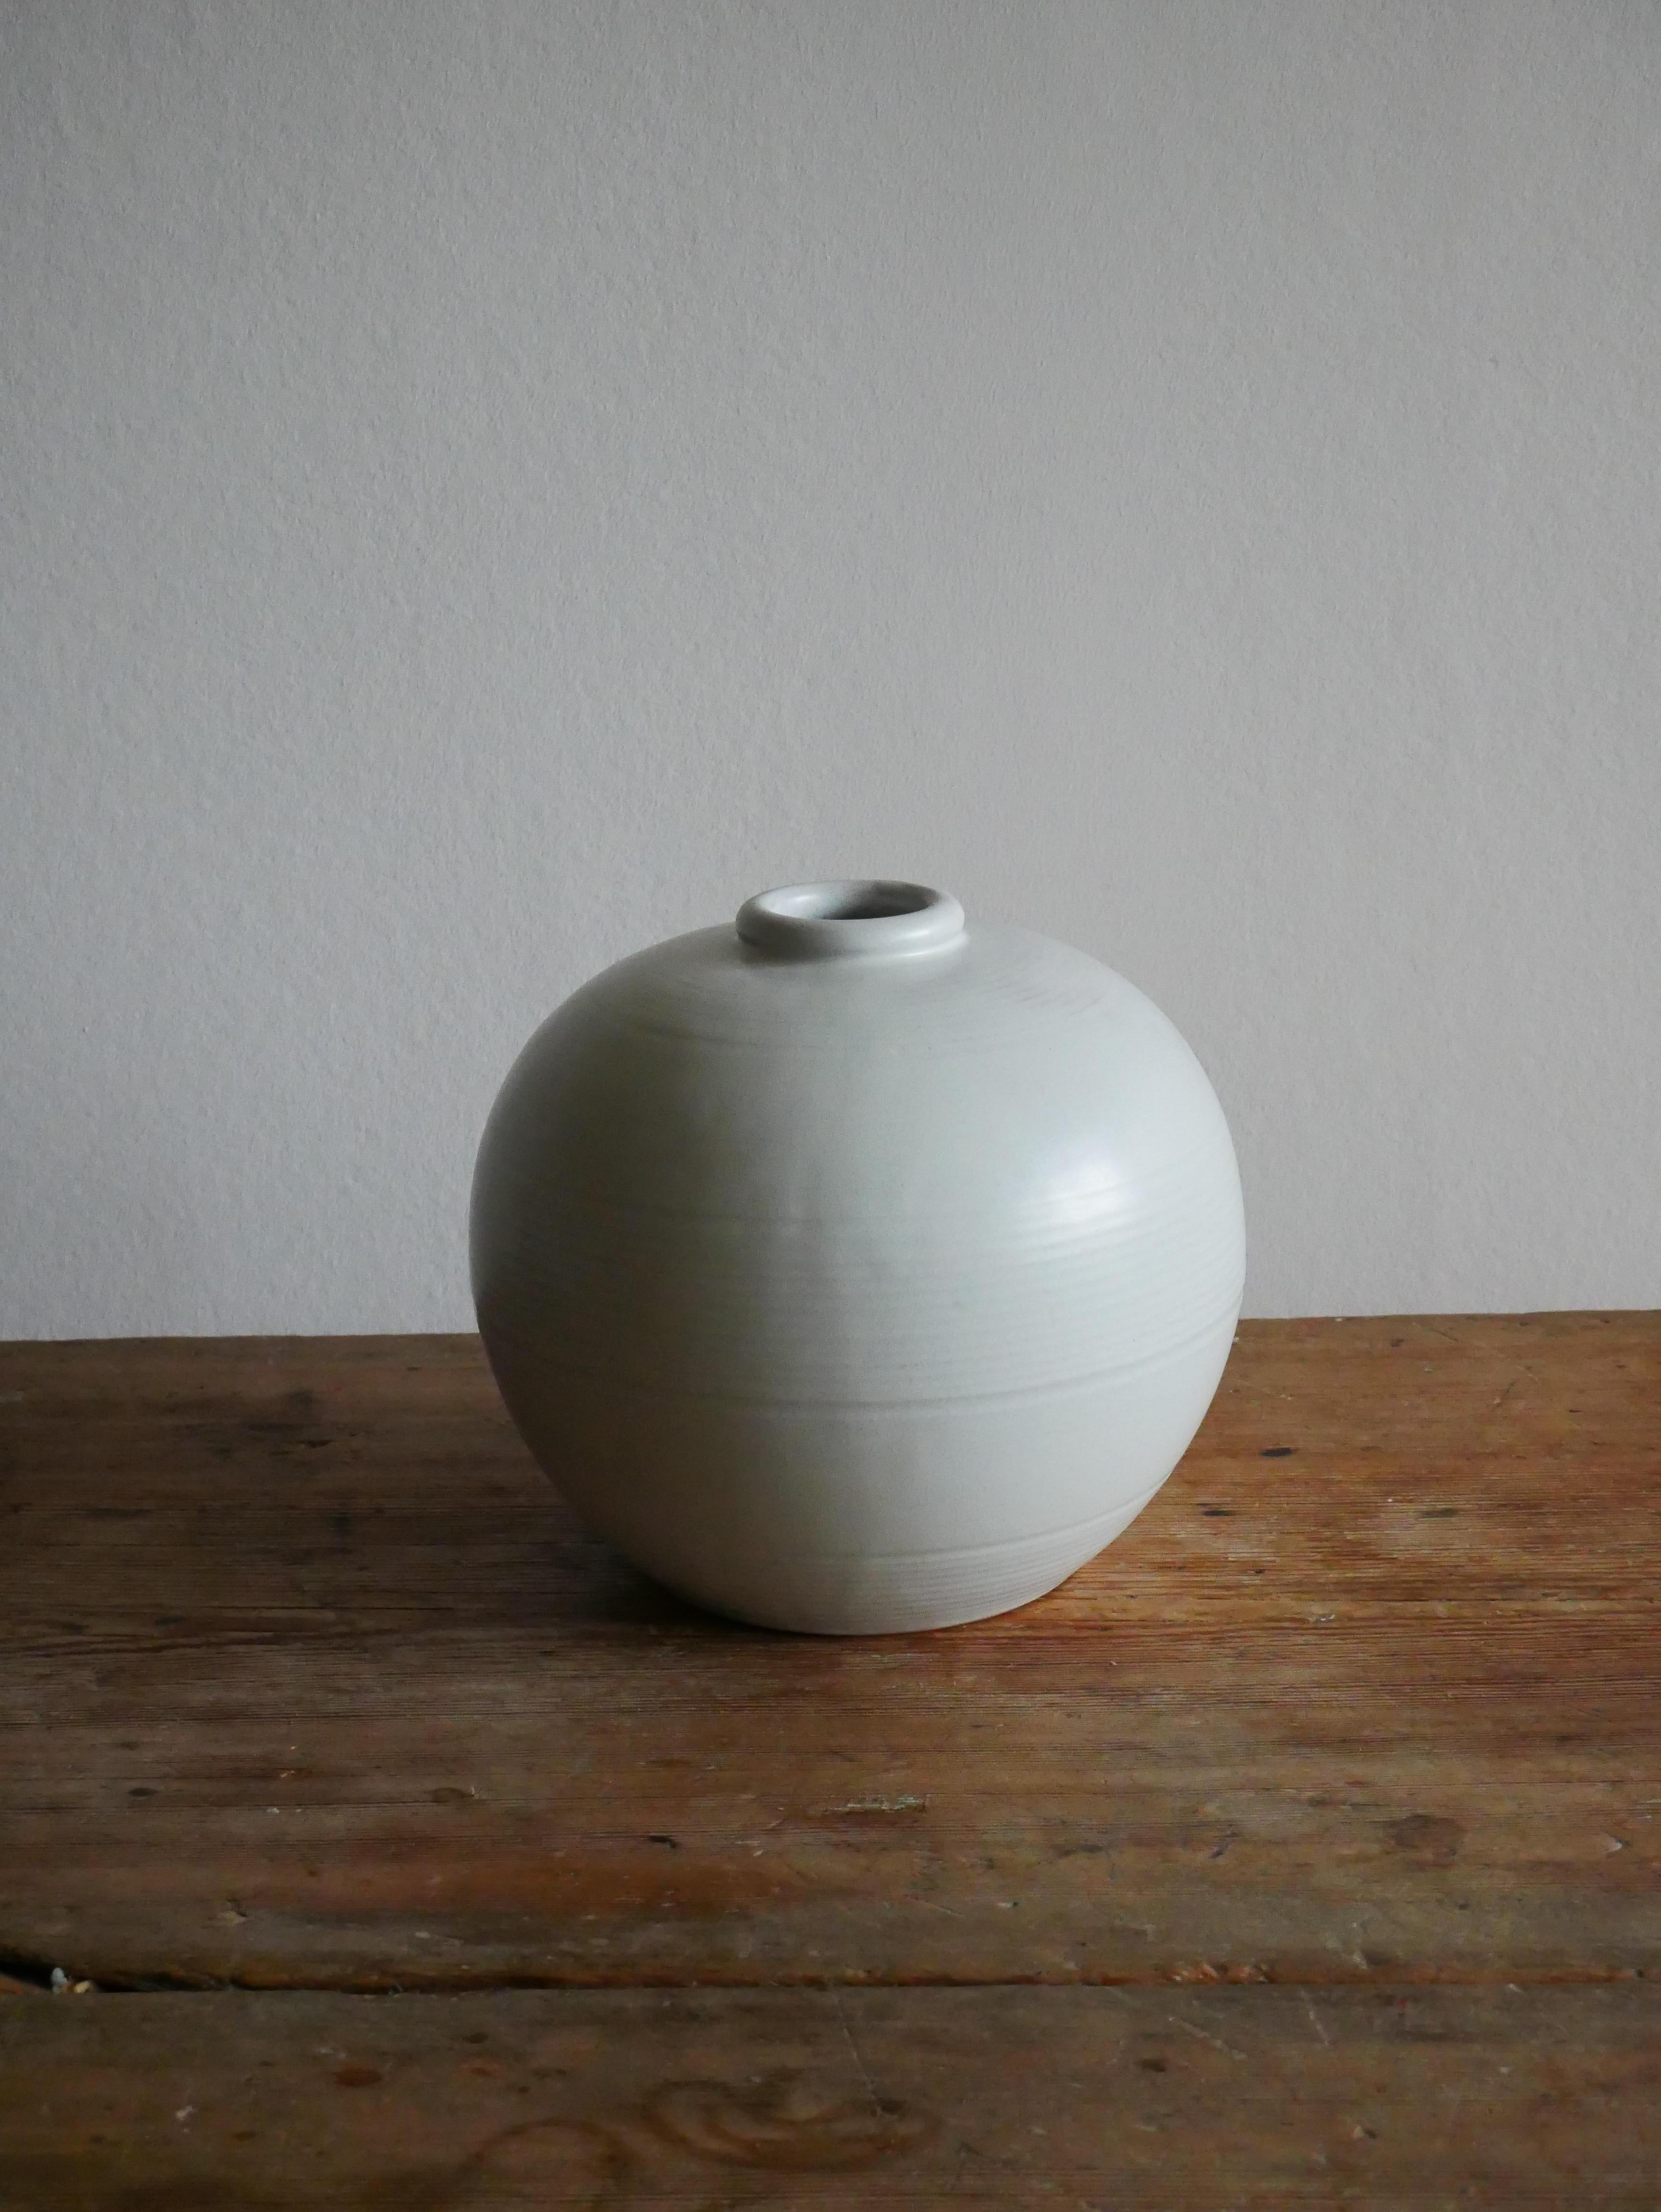 An early modernist vase. 
Designed by Anna-Lisa Thomson, for Upsala-Ekeby, Sweden, 1940s. 
Labeled.

